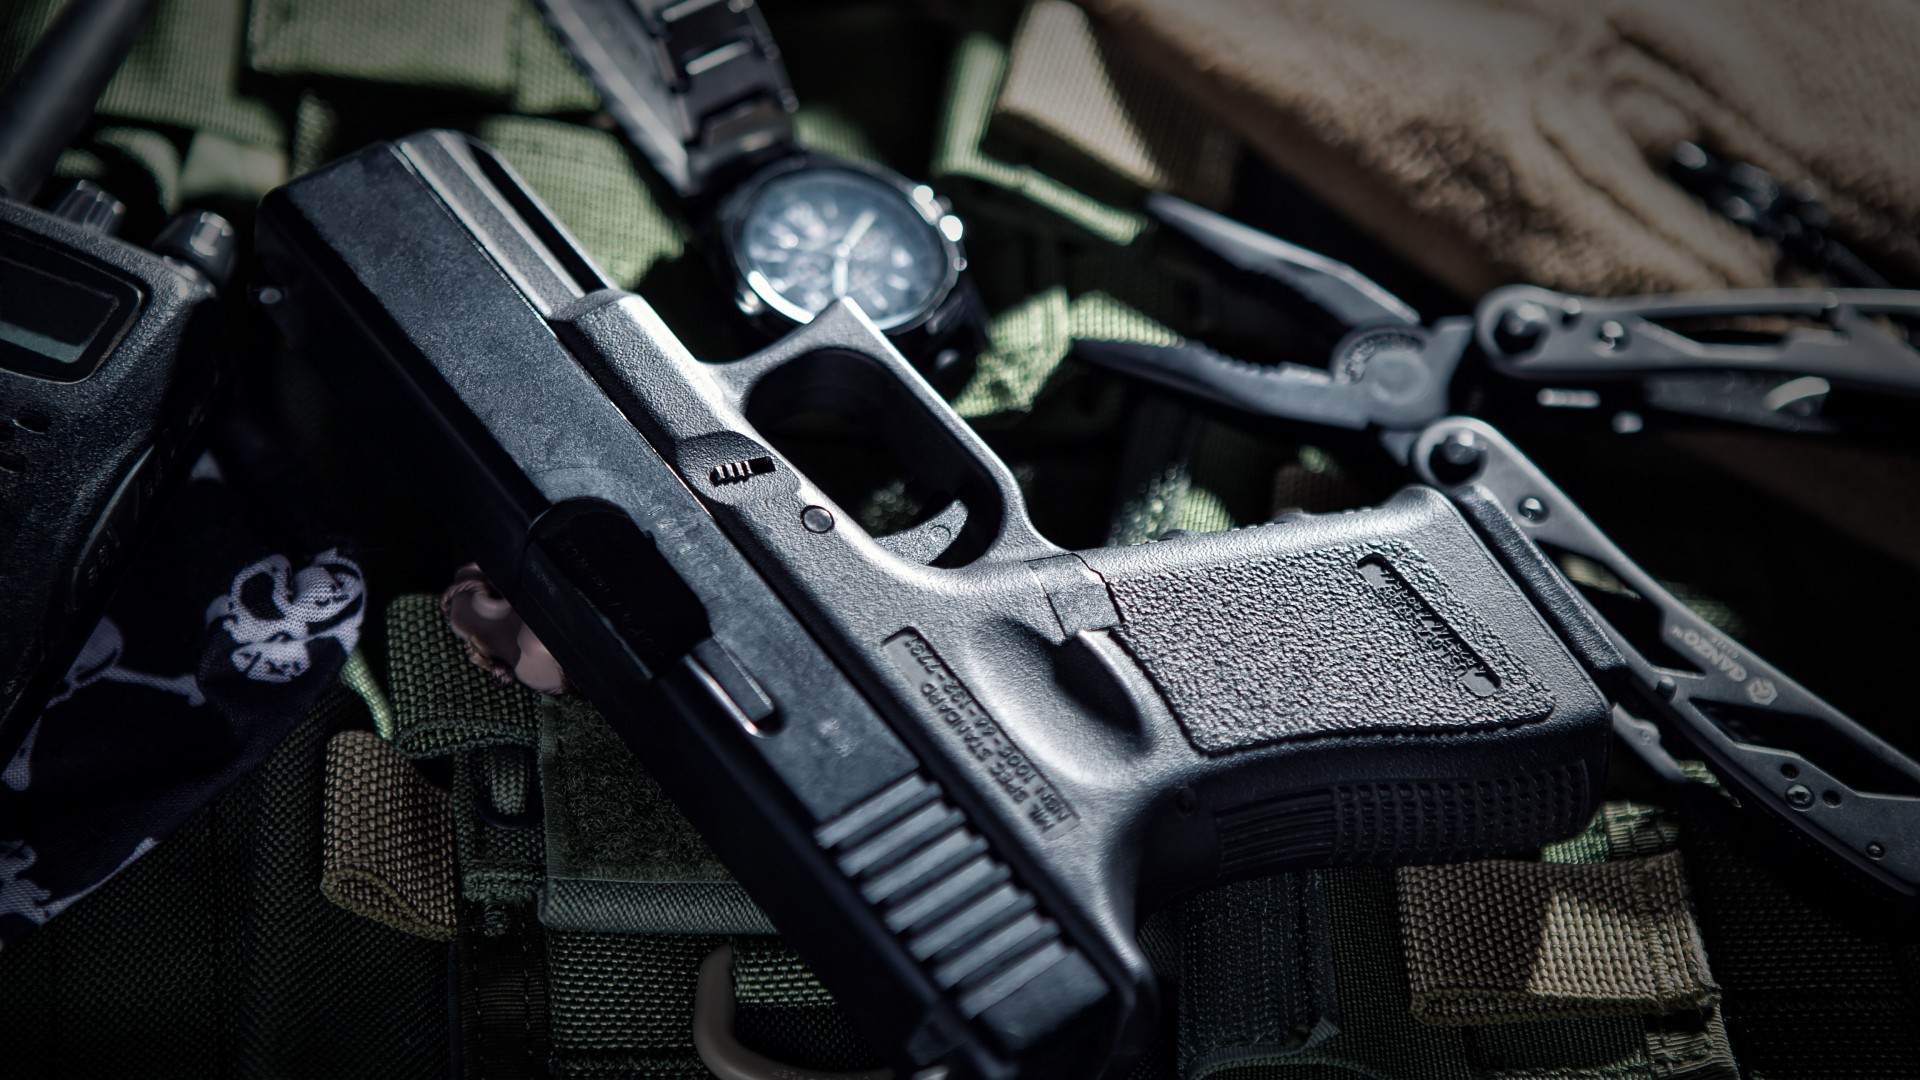 General 1920x1080 Glock pistol military weapon wristwatch Austrian firearms tools closeup side view watch